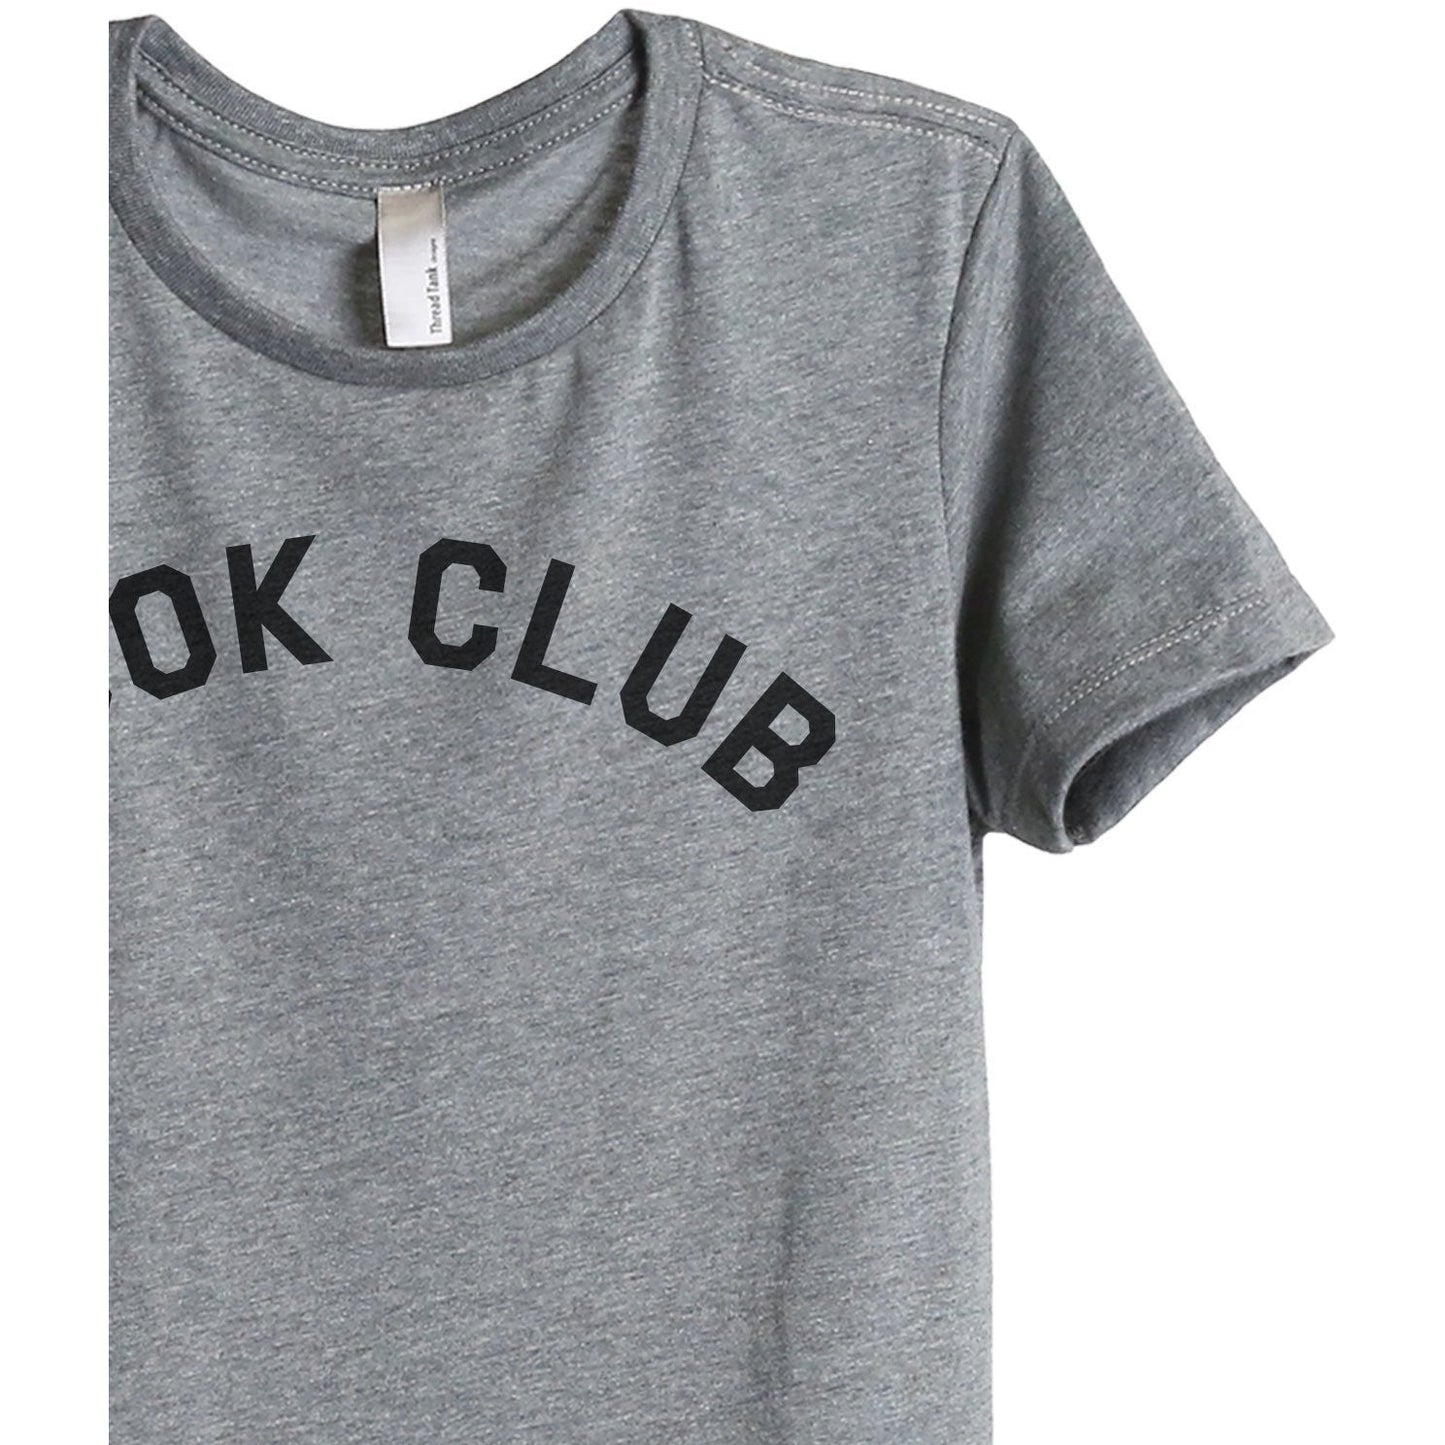 Book Club Women's Relaxed Crewneck T-Shirt Top Tee Heather Grey